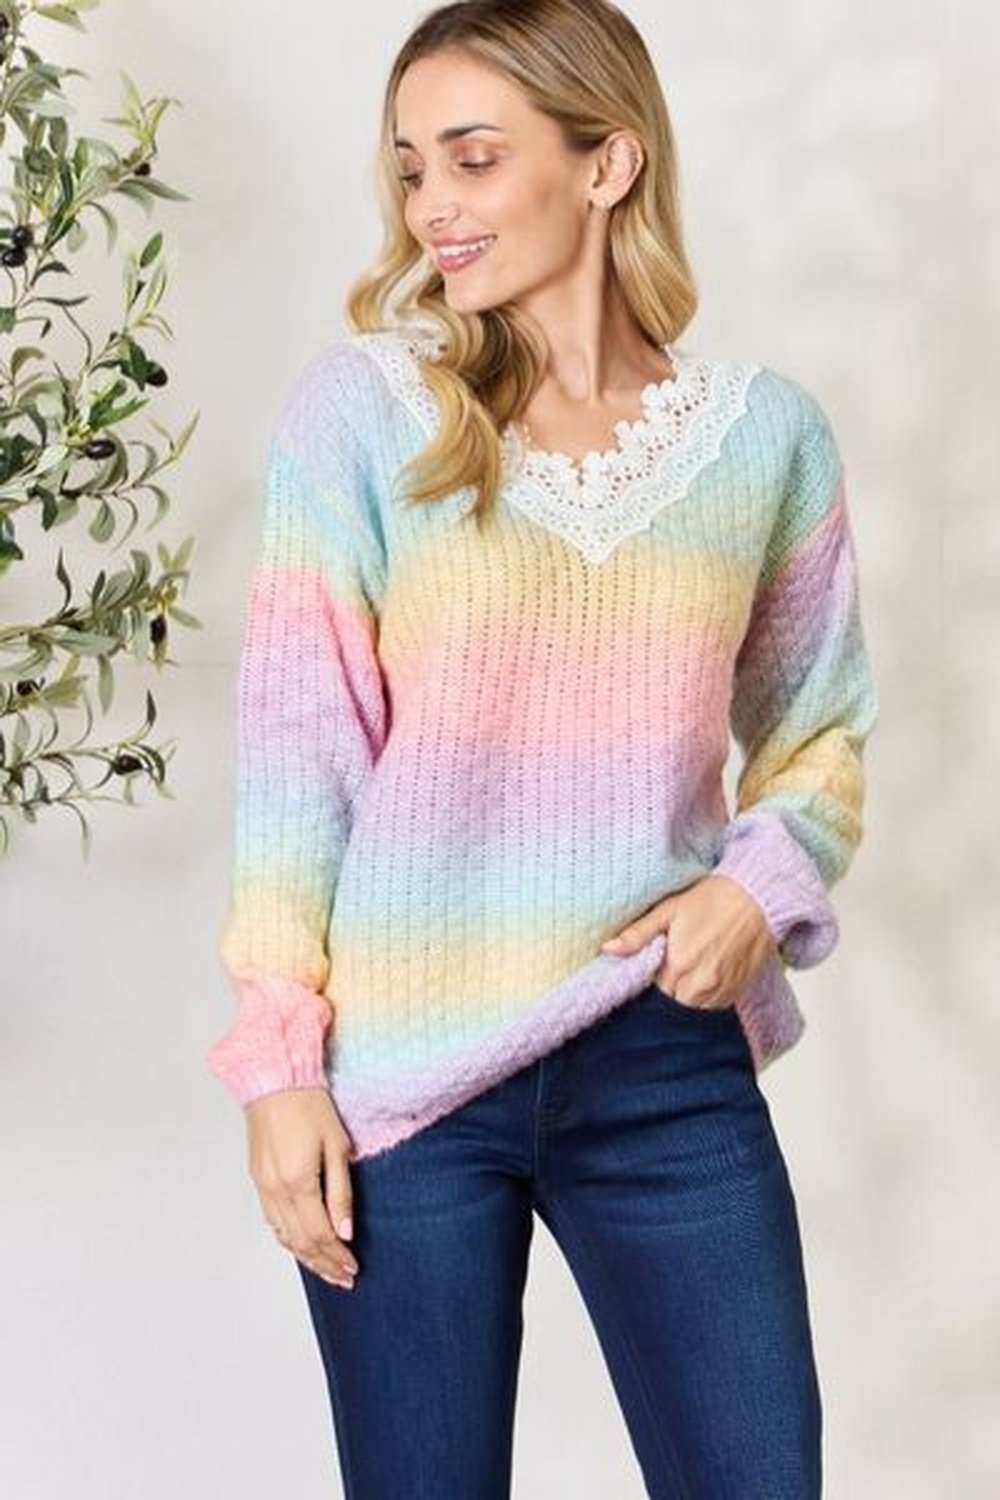 BiBi Rainbow Gradient Crochet Deetail Sweater - Pullover Sweaters - FITGGINS